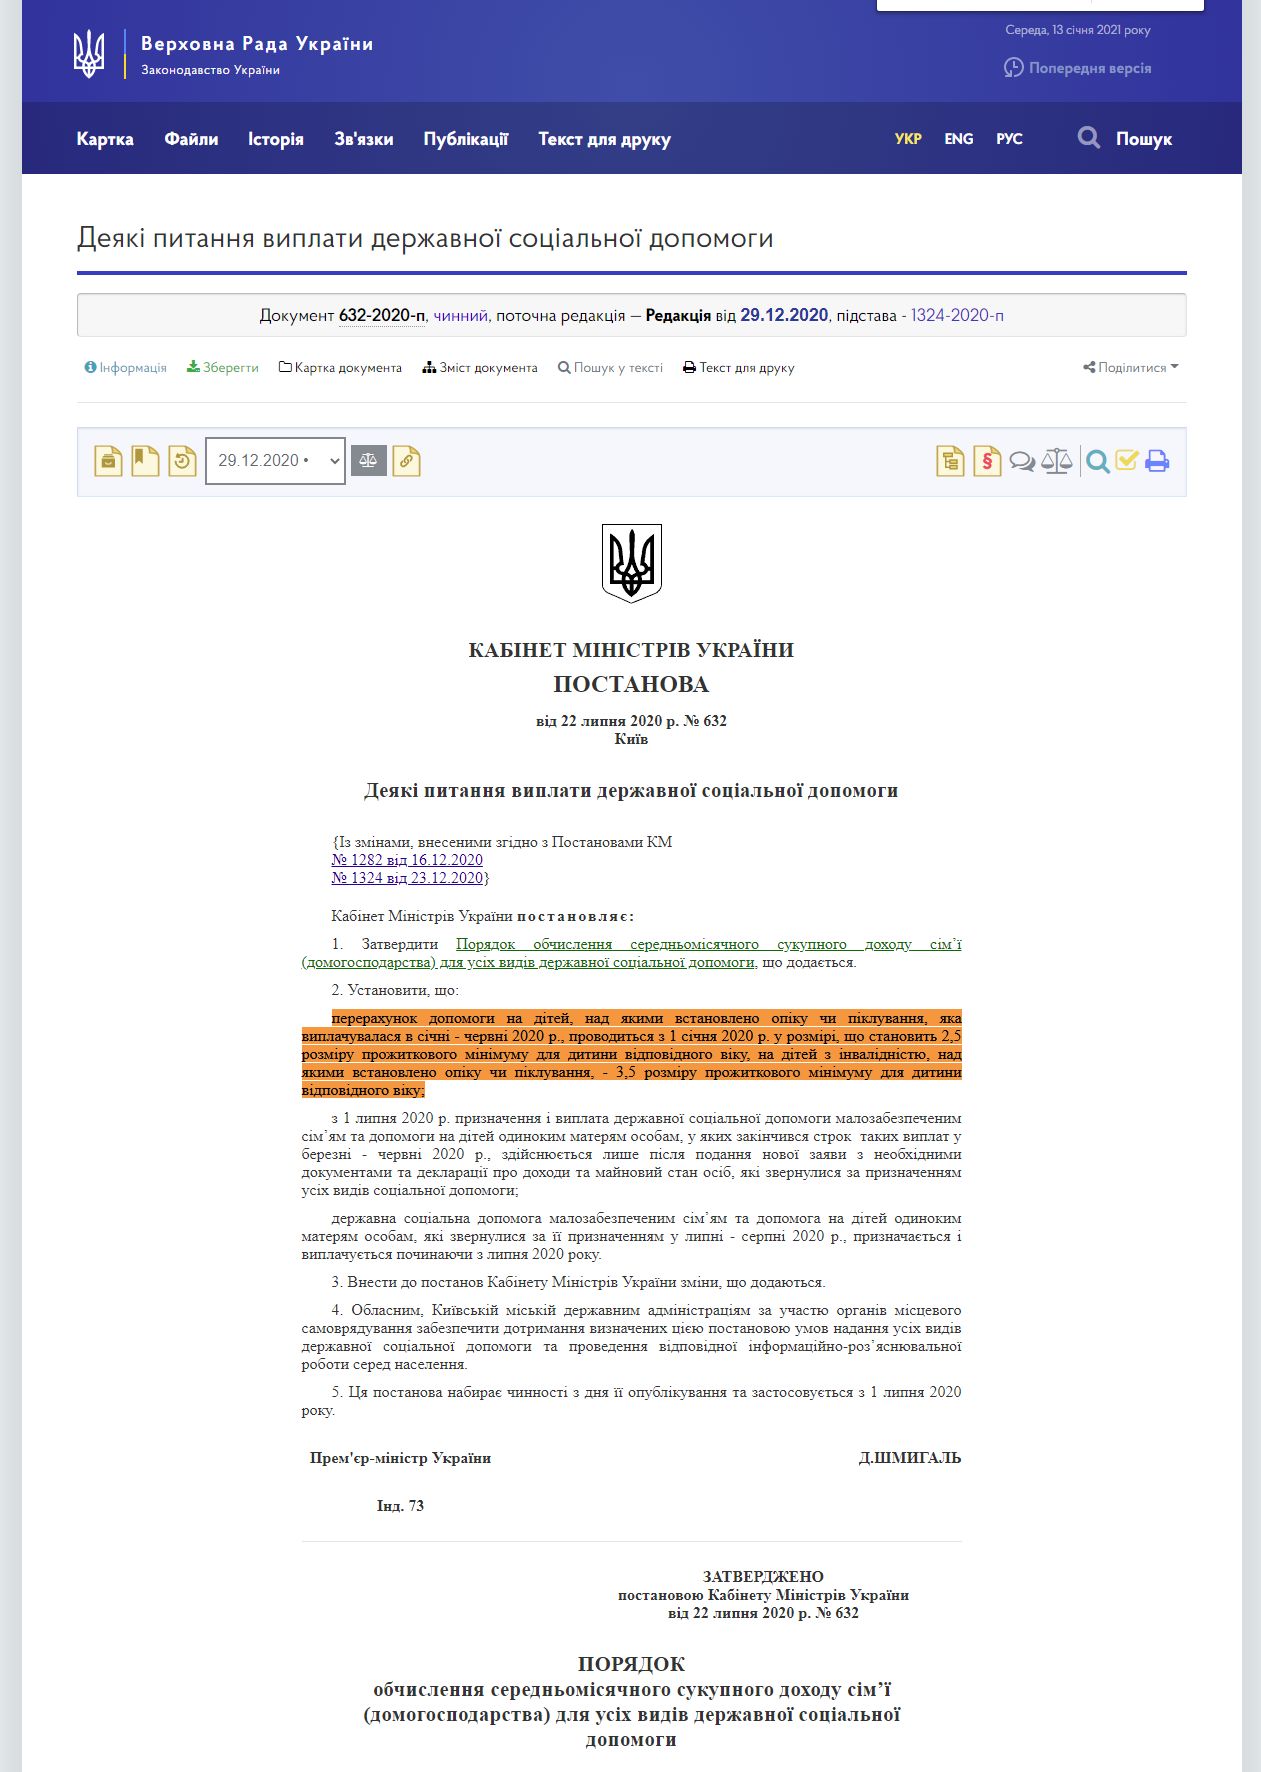 https://zakon.rada.gov.ua/laws/show/632-2020-%D0%BF#Text